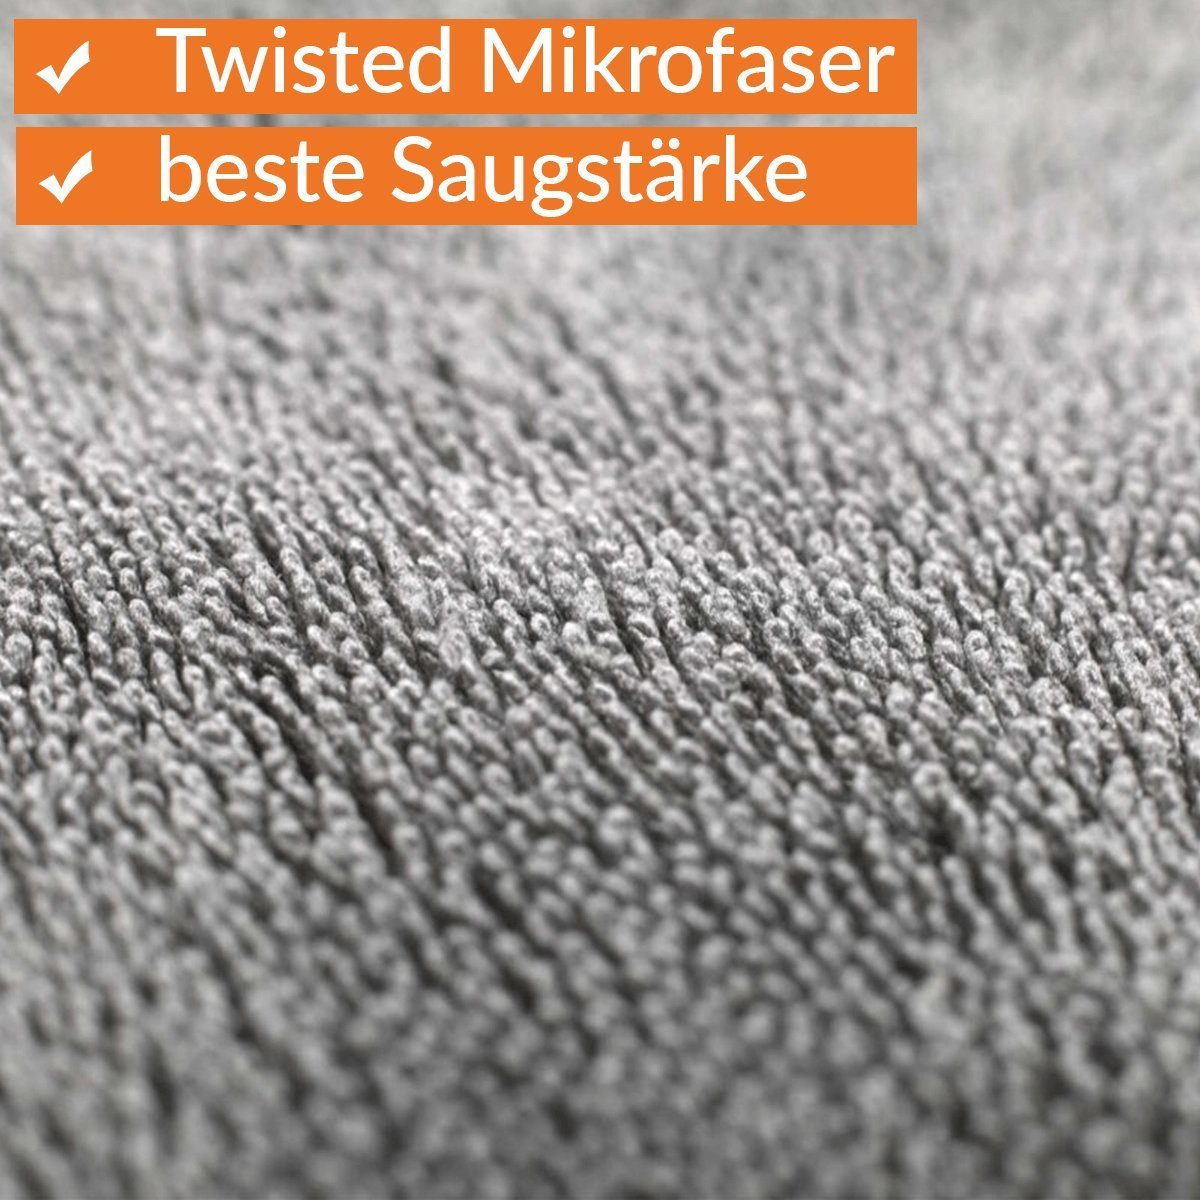 Twisted, saugstarkes innovativer Mikrofasertuch Kontruktion, Lack) perfekt One Trockentuch mit Cut für fens (Twisted,